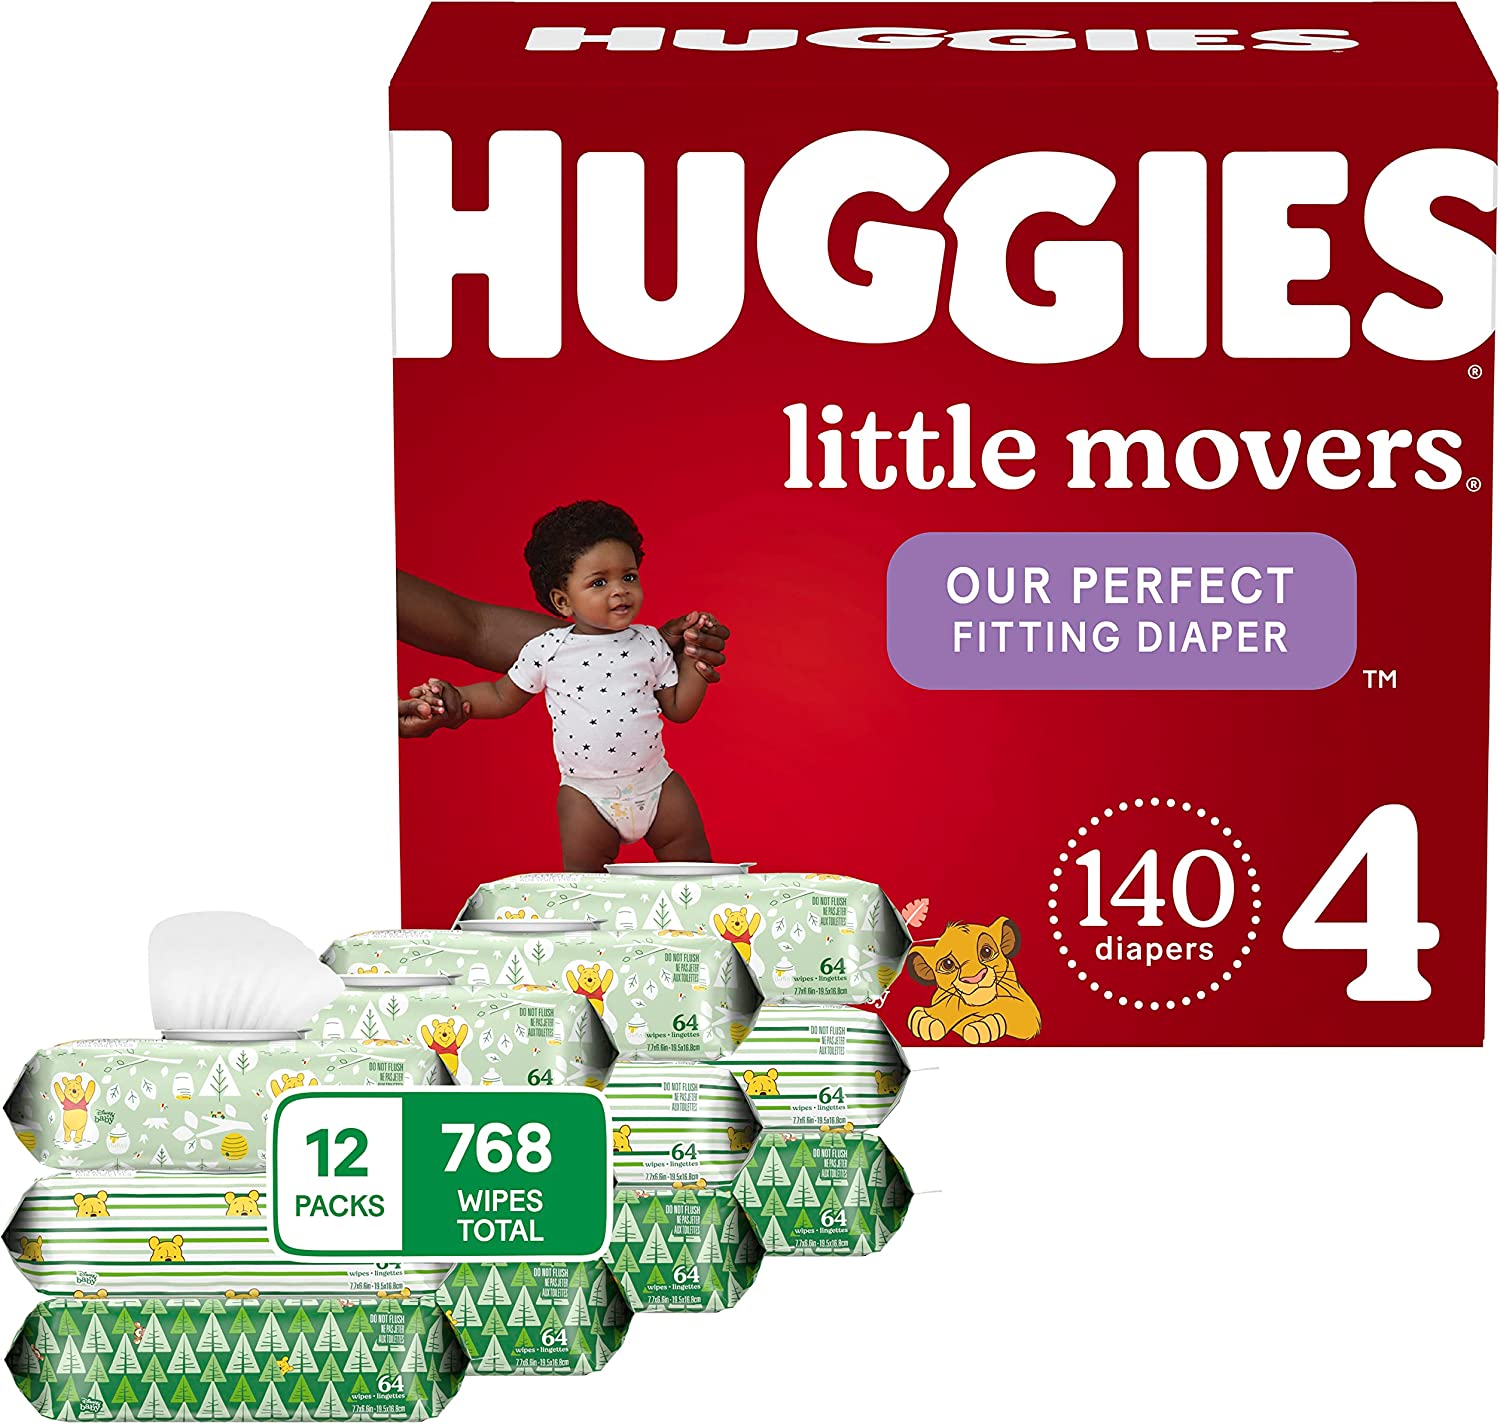 Deal Alert! Amazon is Having a Huge Sale on Huggies Diapers & Wipes